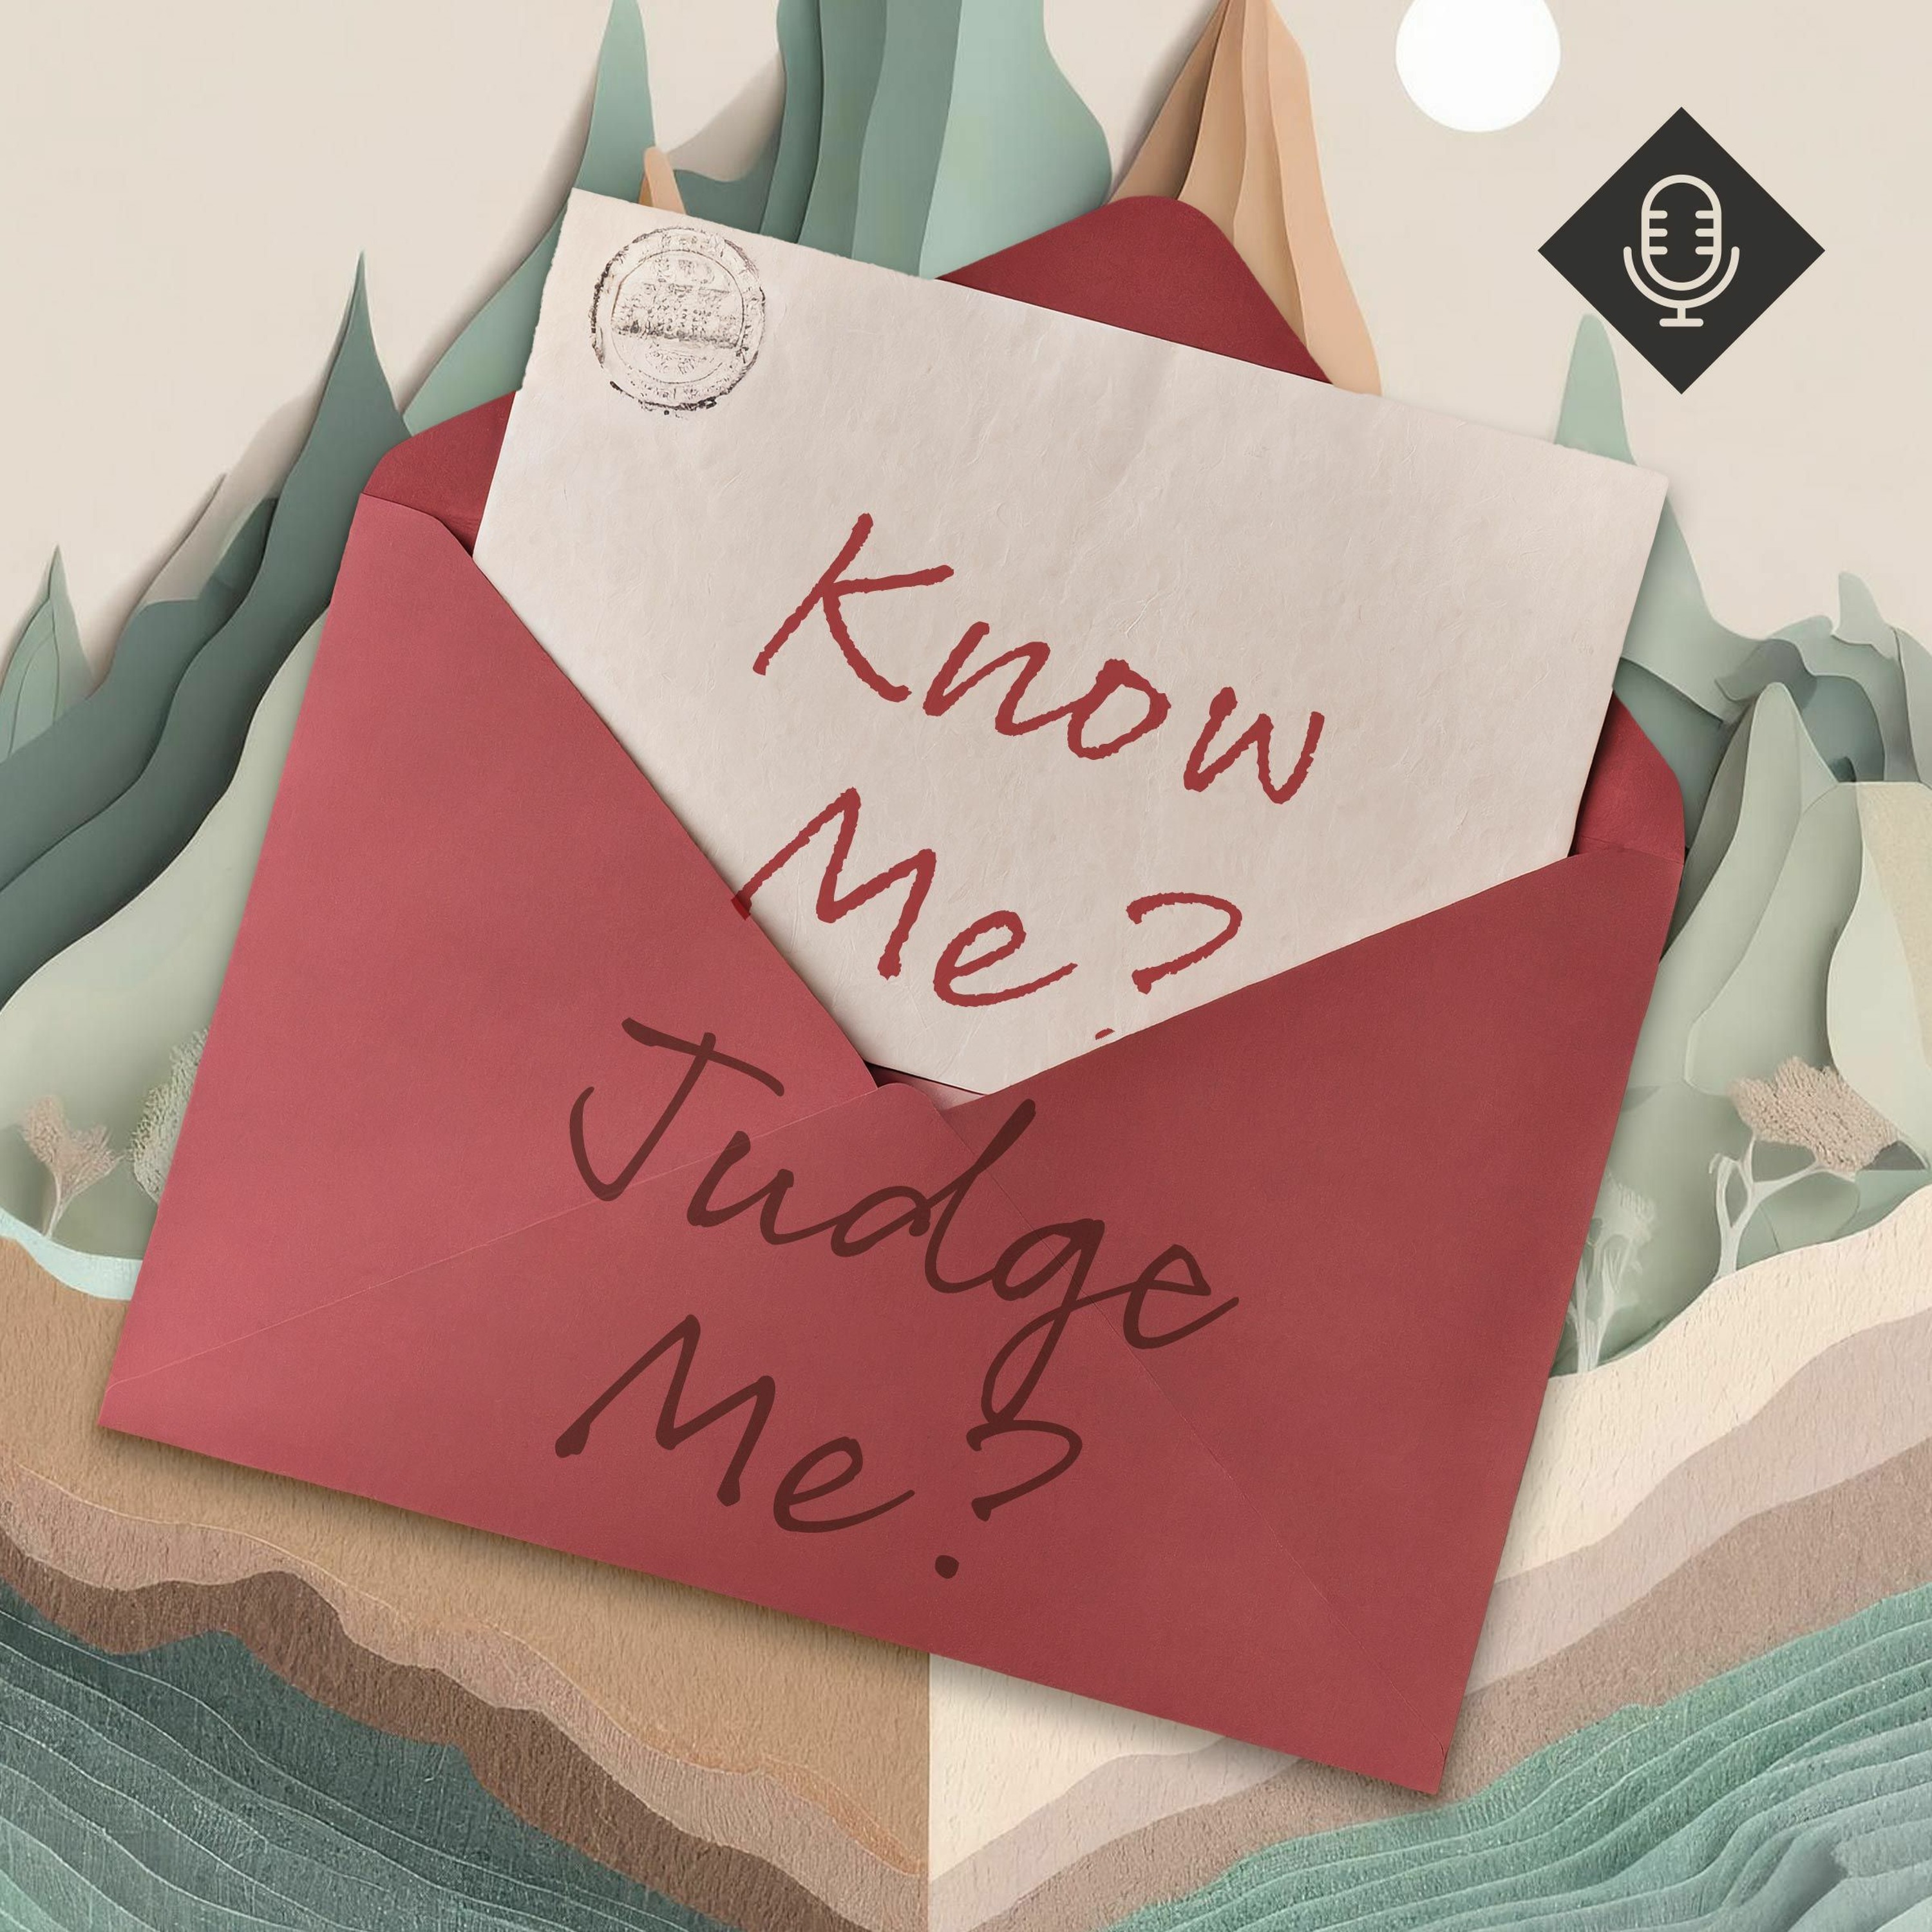 'You Judge Me Before You Know Me' / Neil Dawson